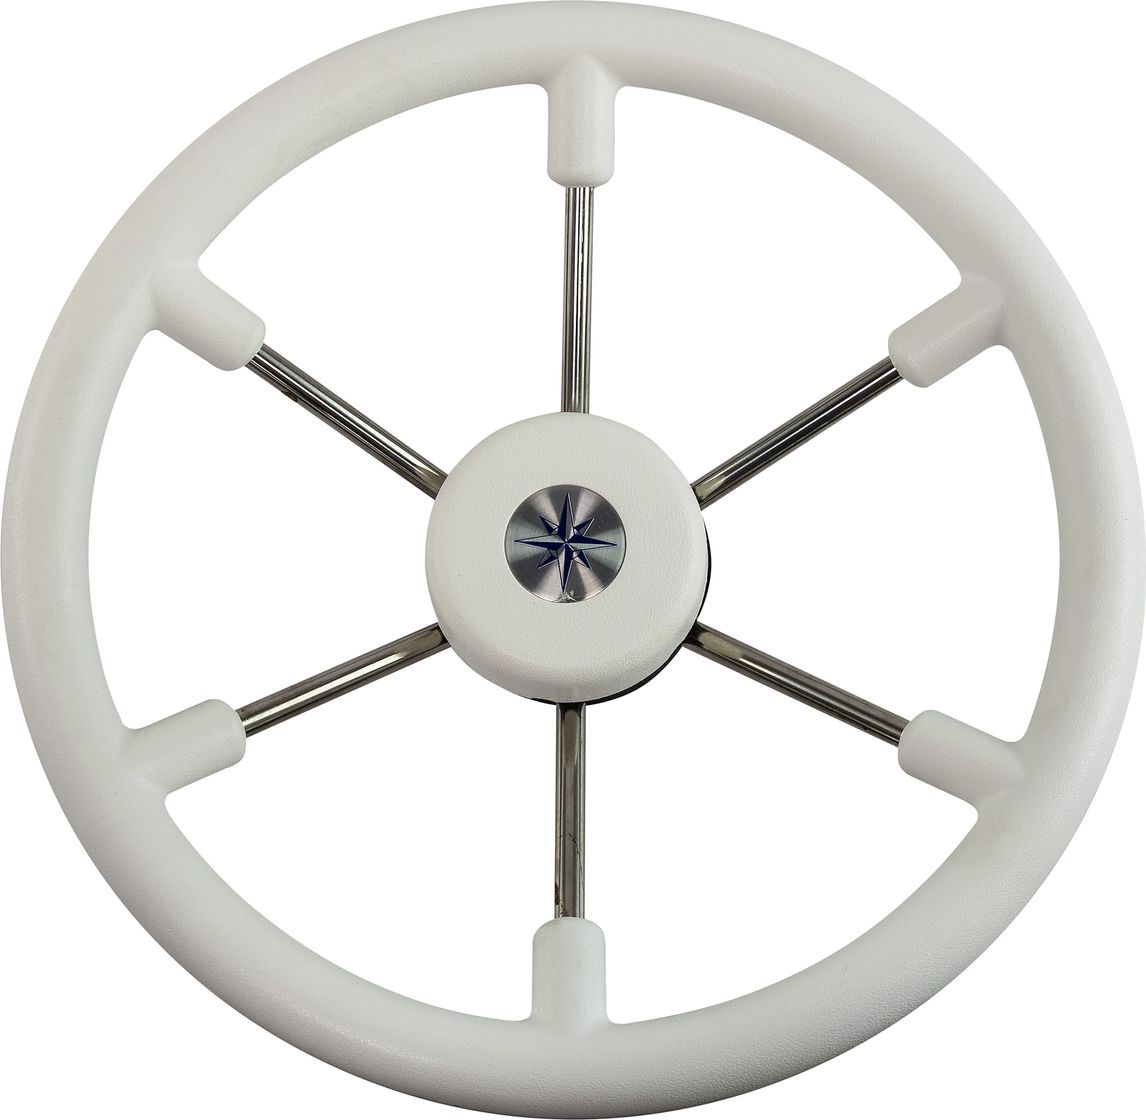 Рулевое колесо LEADER TANEGUM белый обод серебряные спицы д. 360 мм VN7360-08 рулевое колесо leader plast обод серебряные спицы д 360 мм vn8360 01